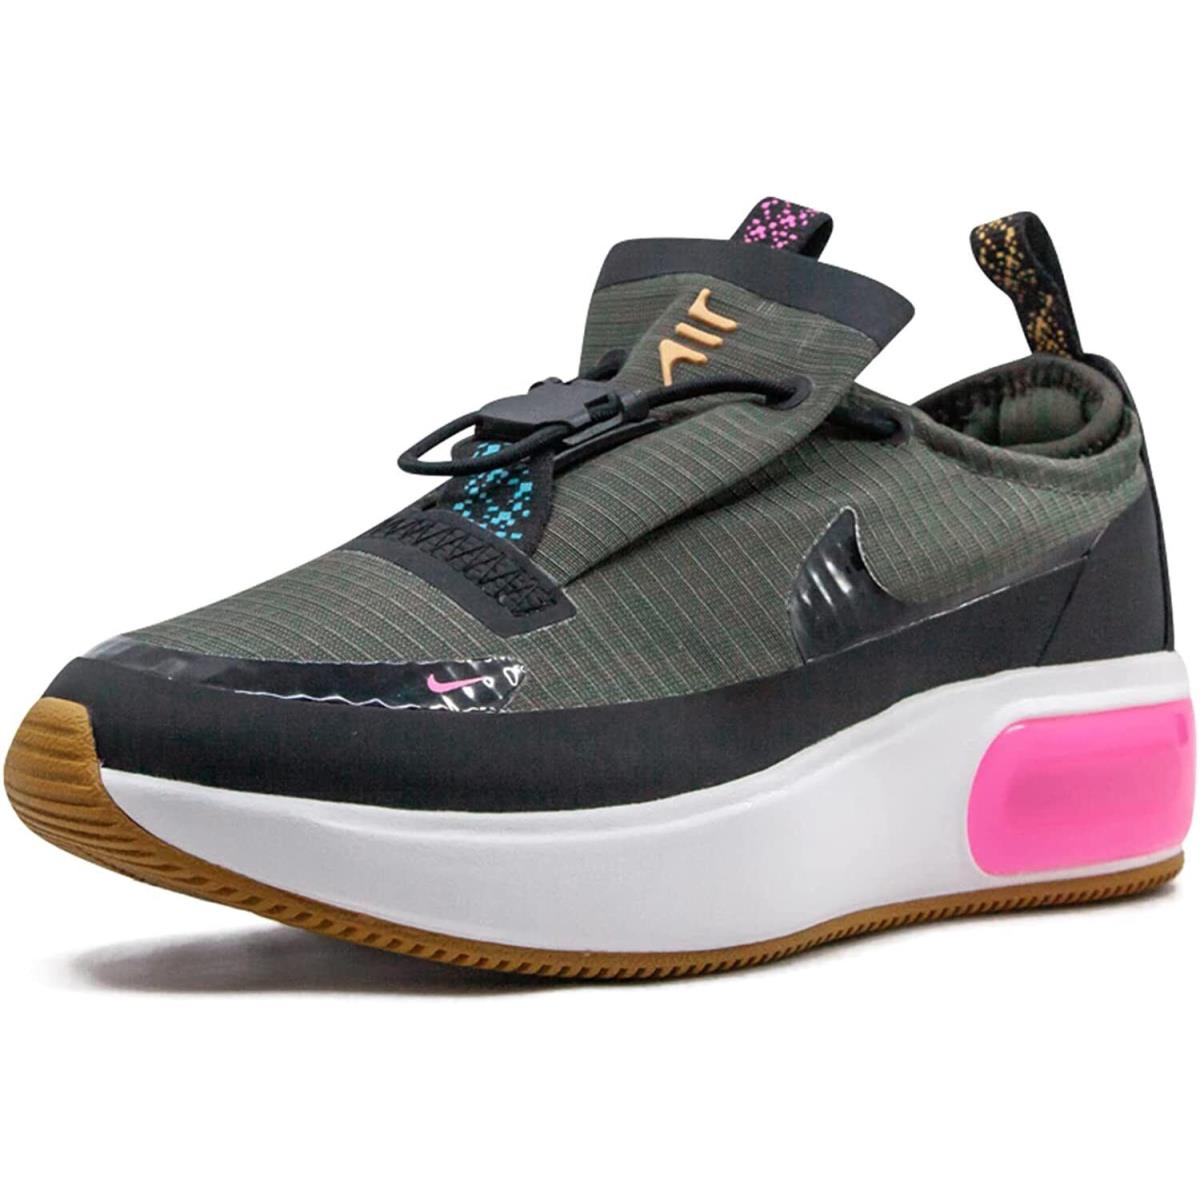 W Nike Air Max Dia Winter Women`s Shoe Bq9665 301 Size 7.5 US with Box